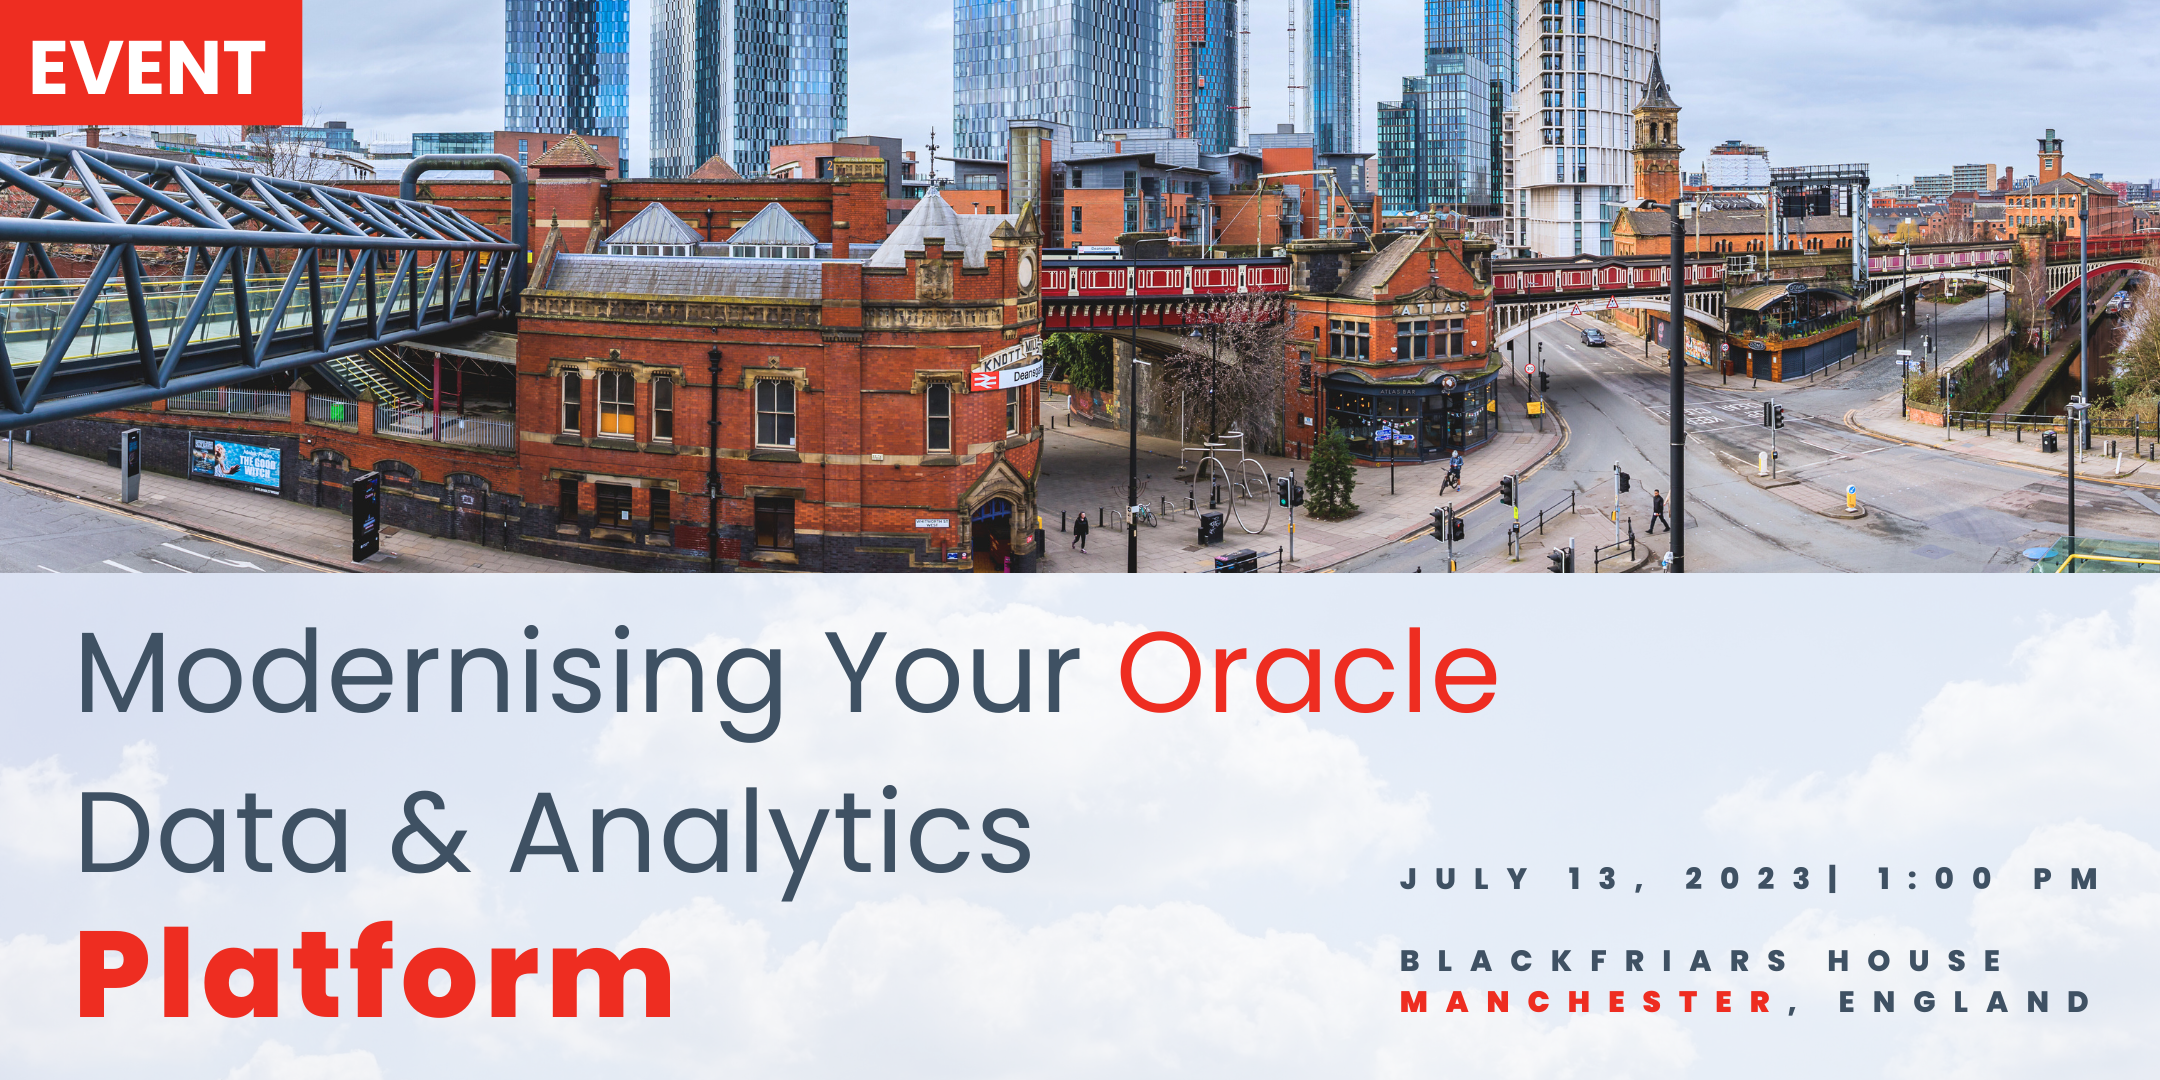 EVENT: Modernising Your Oracle Data & Analytics Platform